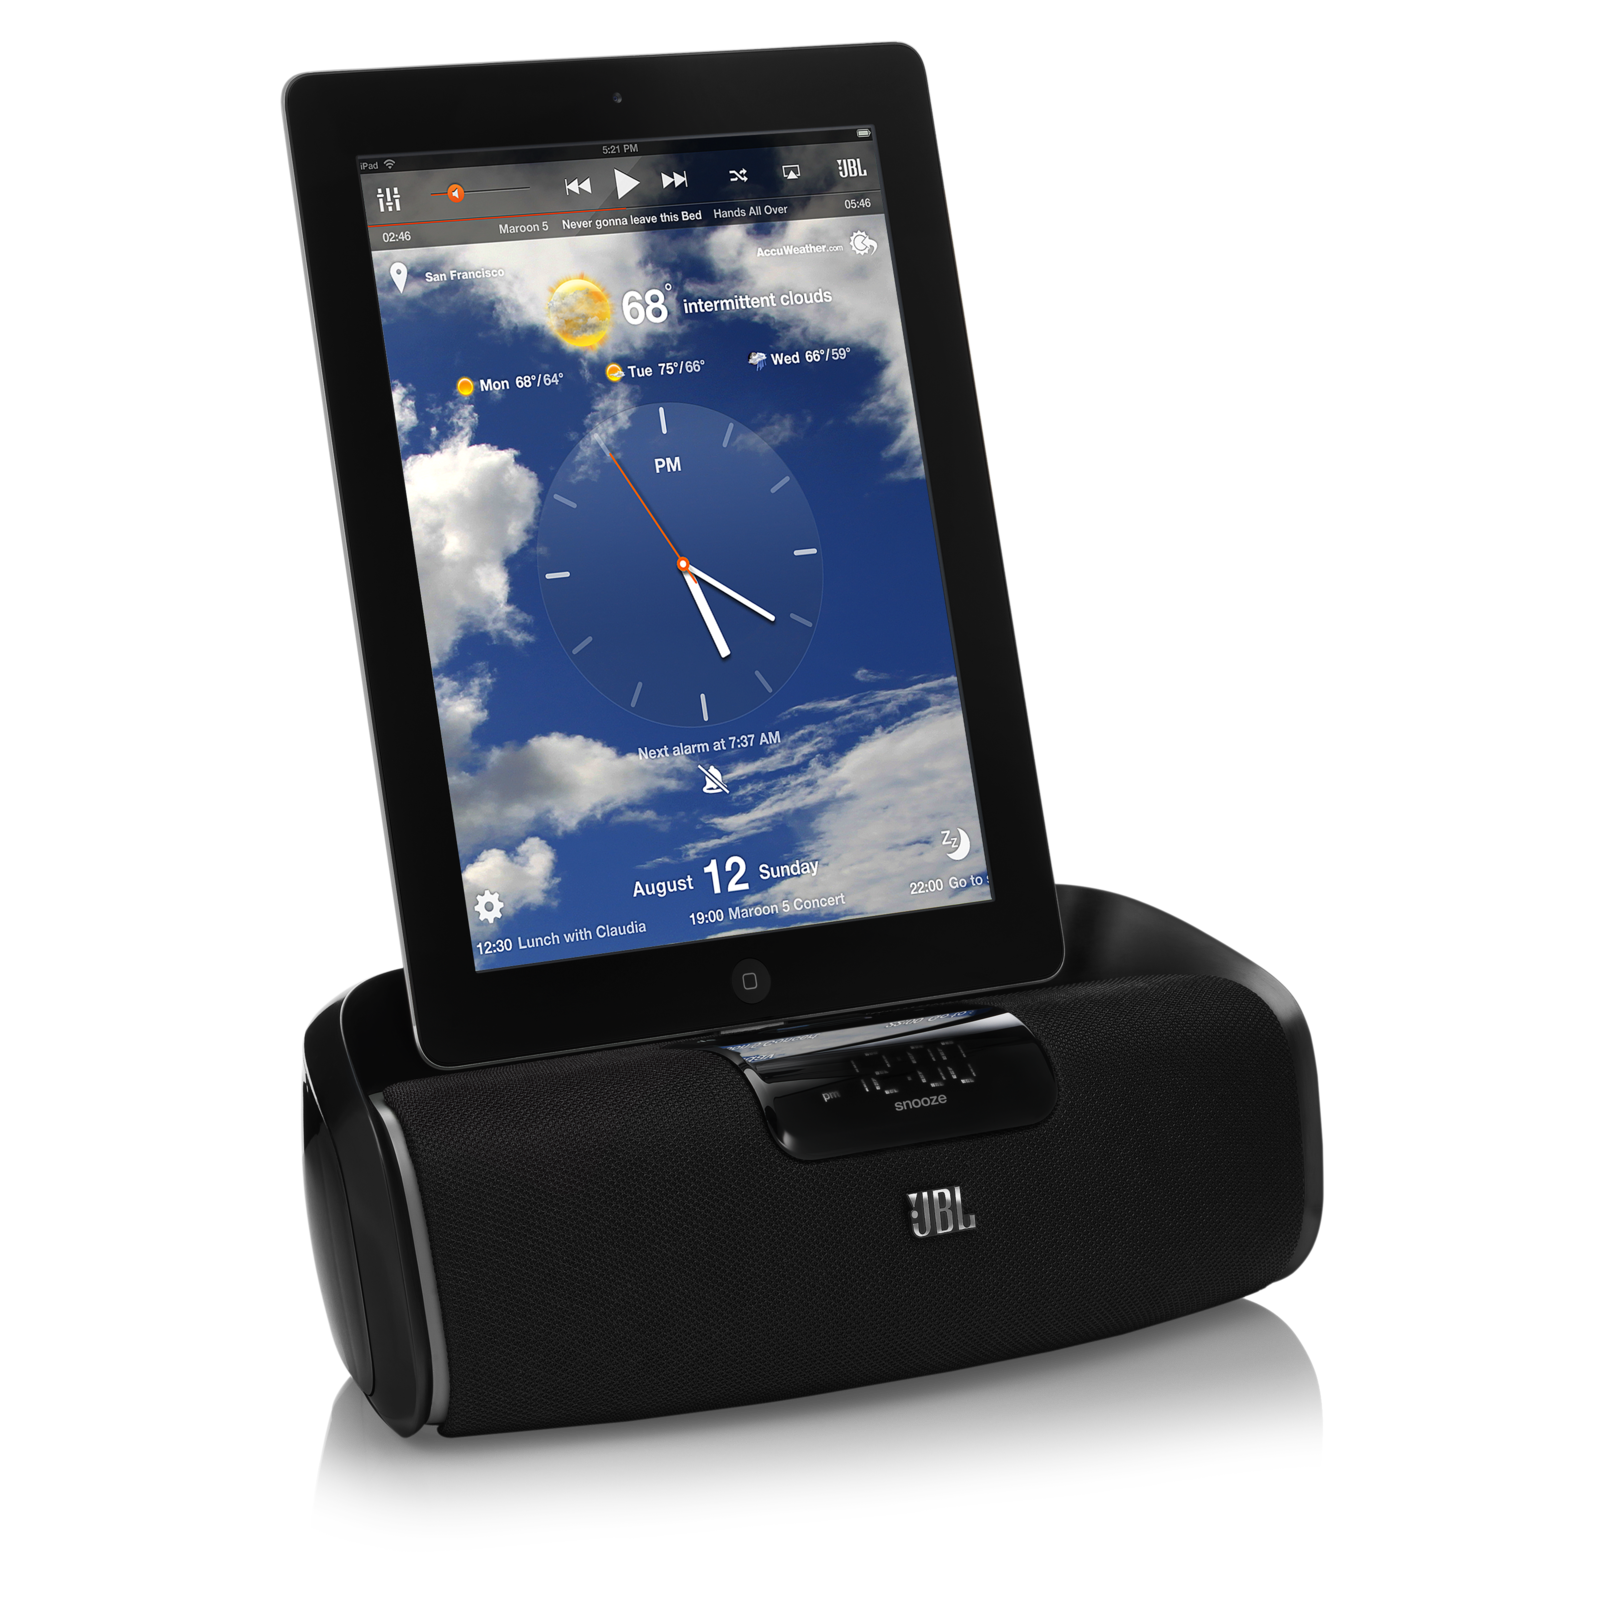 JBL OnBeat aWake - Black - Wireless Bluetooth Speaker Dock for iPod/iPad/iPhone - Detailshot 1